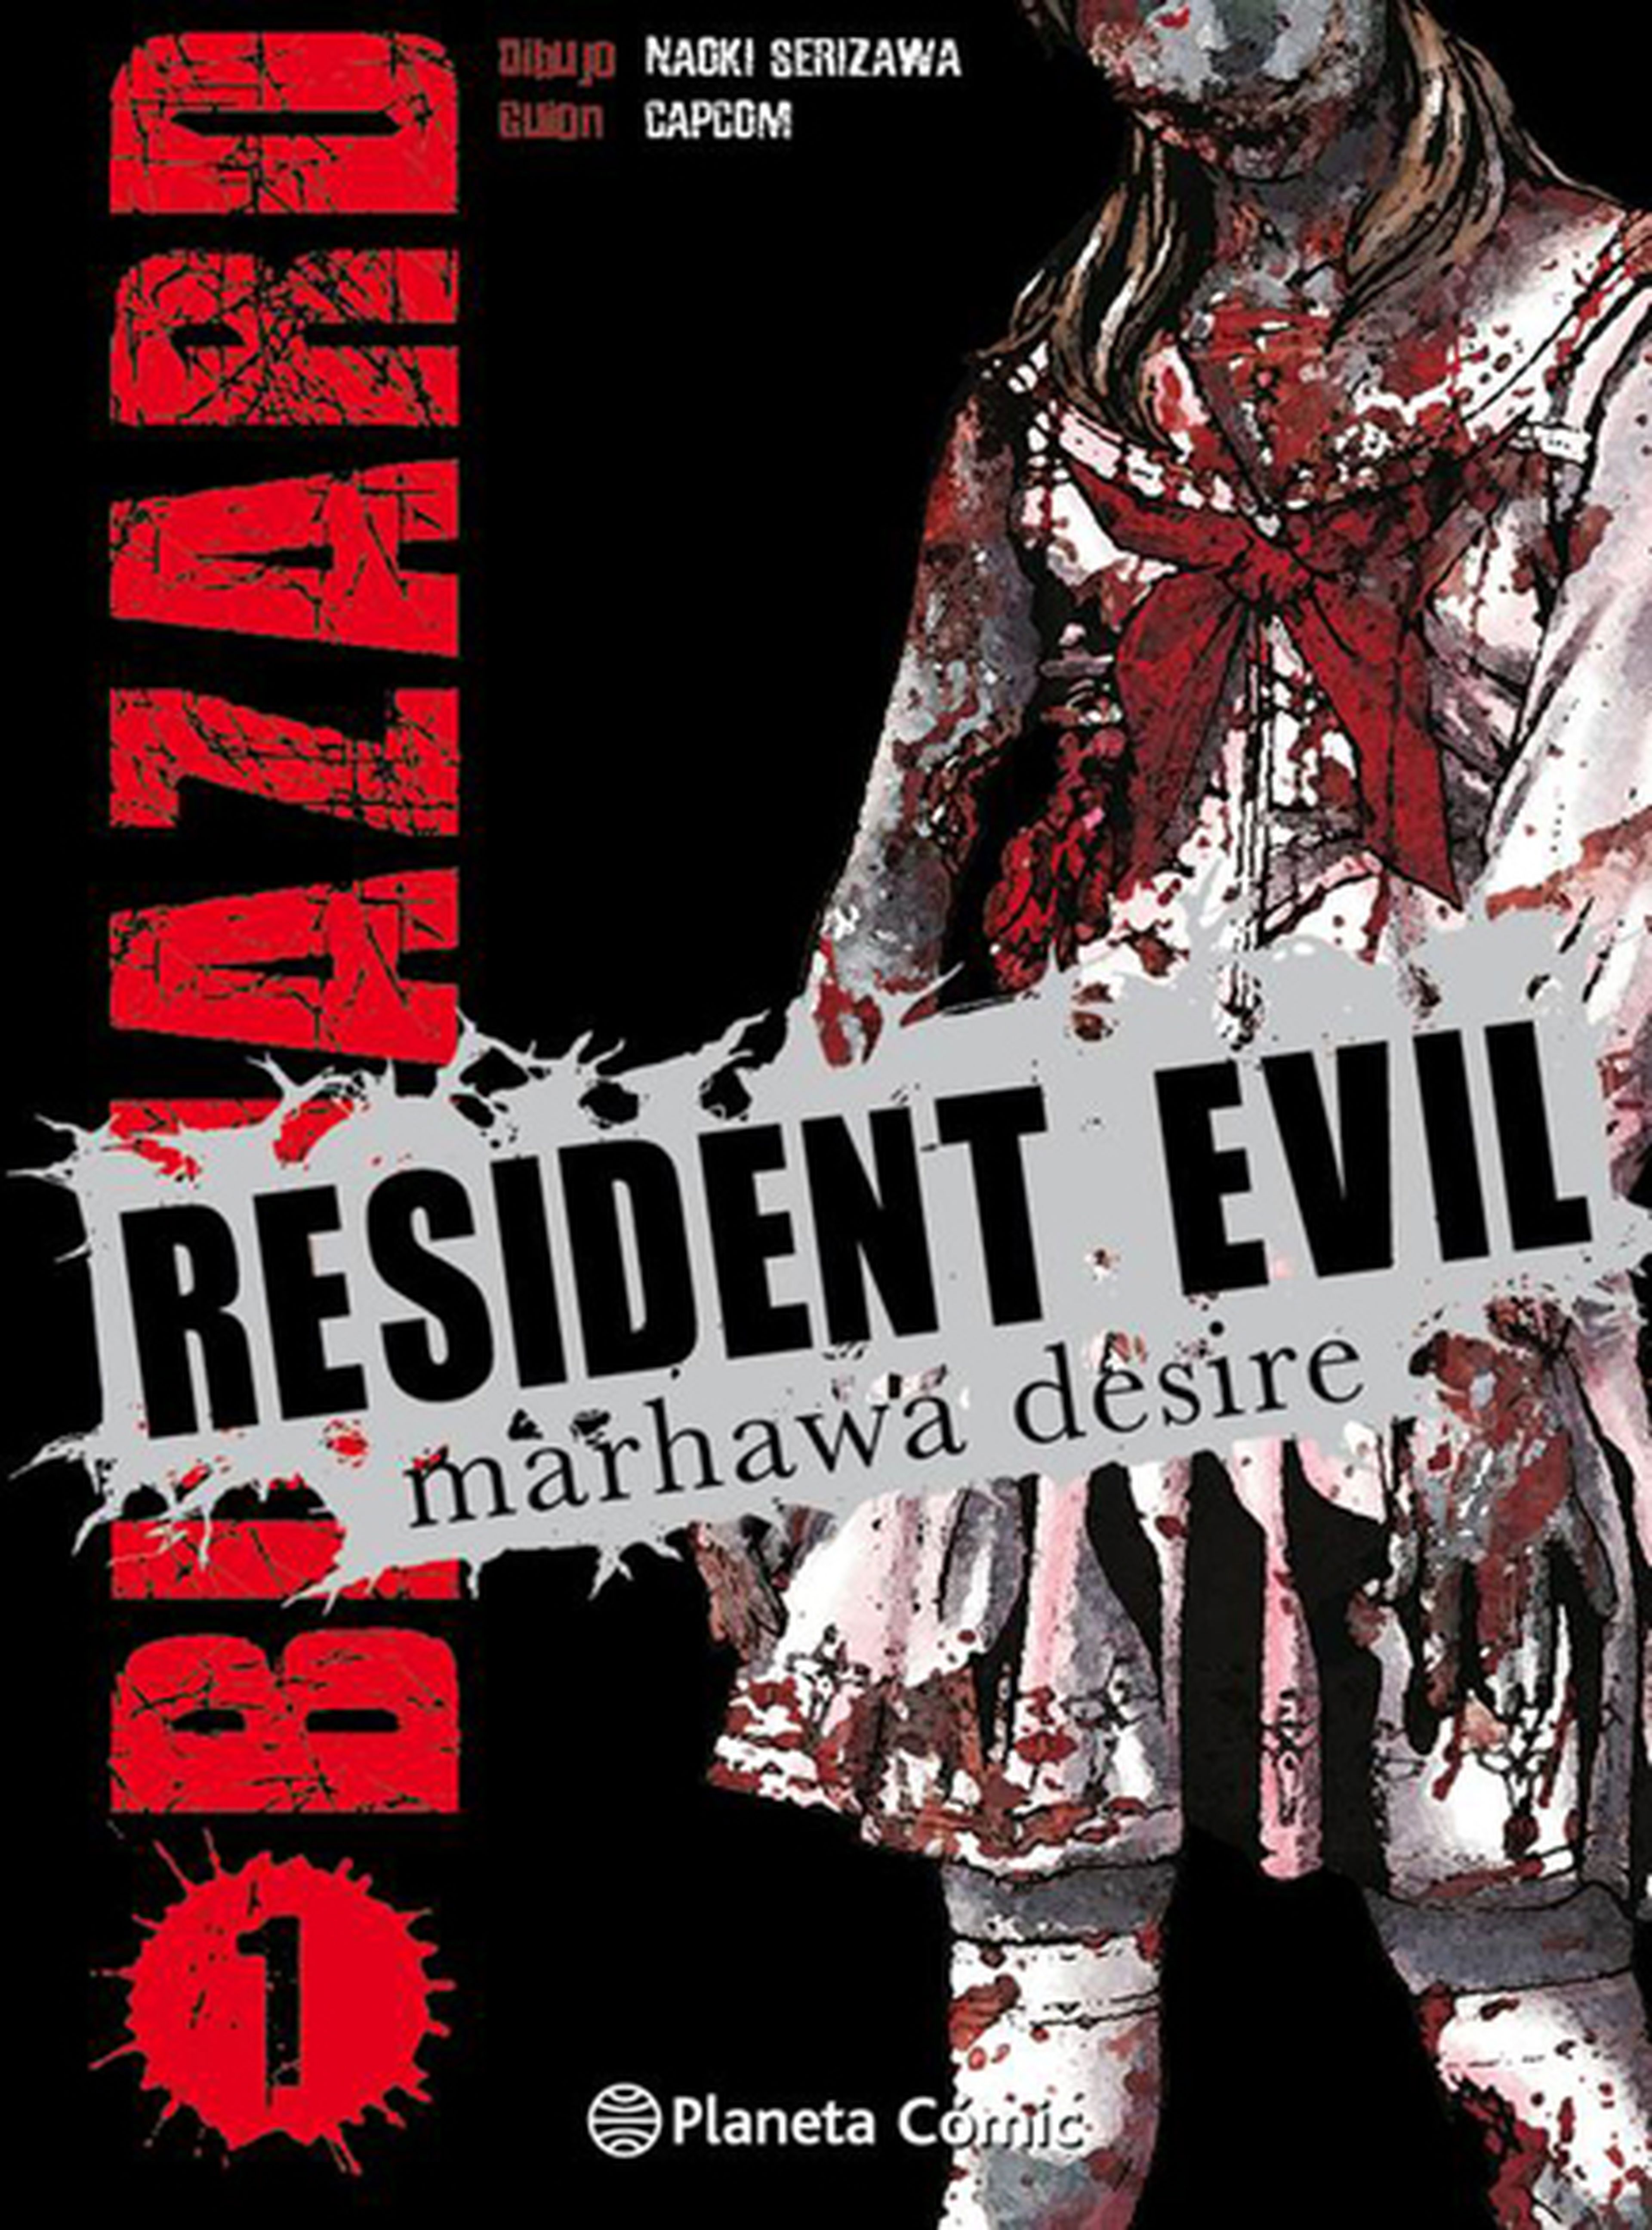 Resident Evil: Marhawa Desire, en septiembre